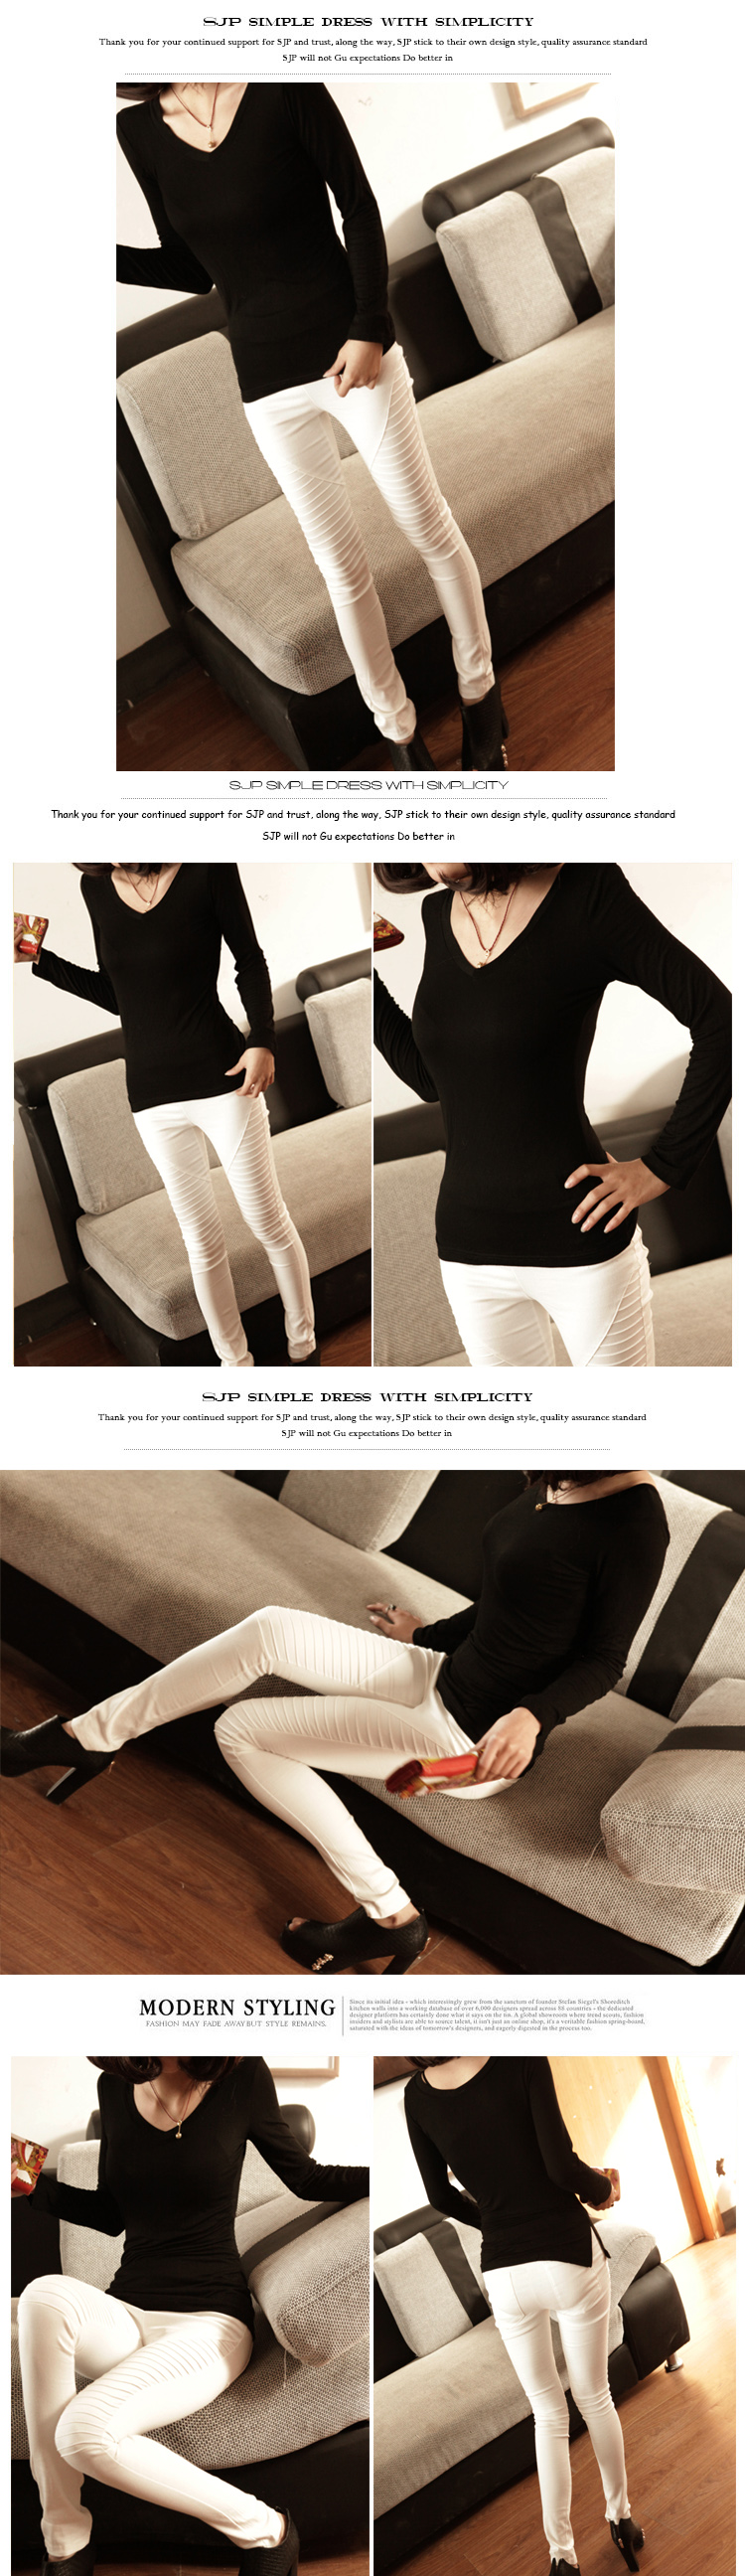 mssefn  2014新款女装 韩版简约V领中长款打底衫纯色修身女款长袖t恤8607-MZ03